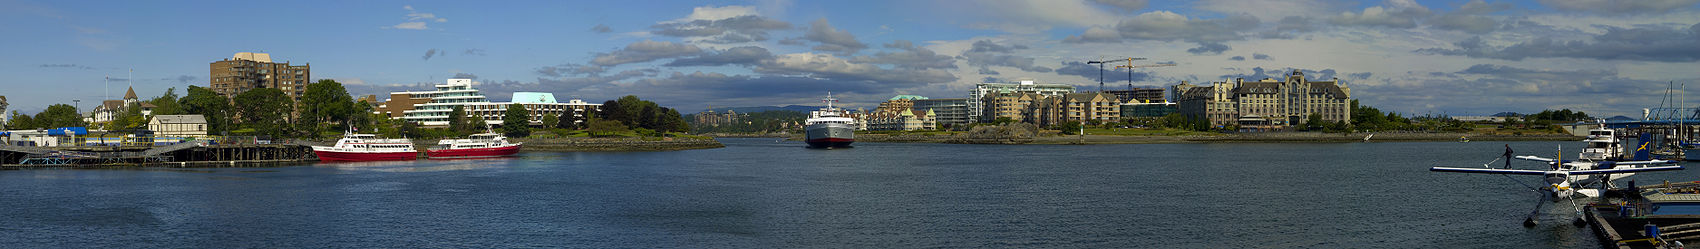 MV Coho in Victoria's inner harbor.jpg